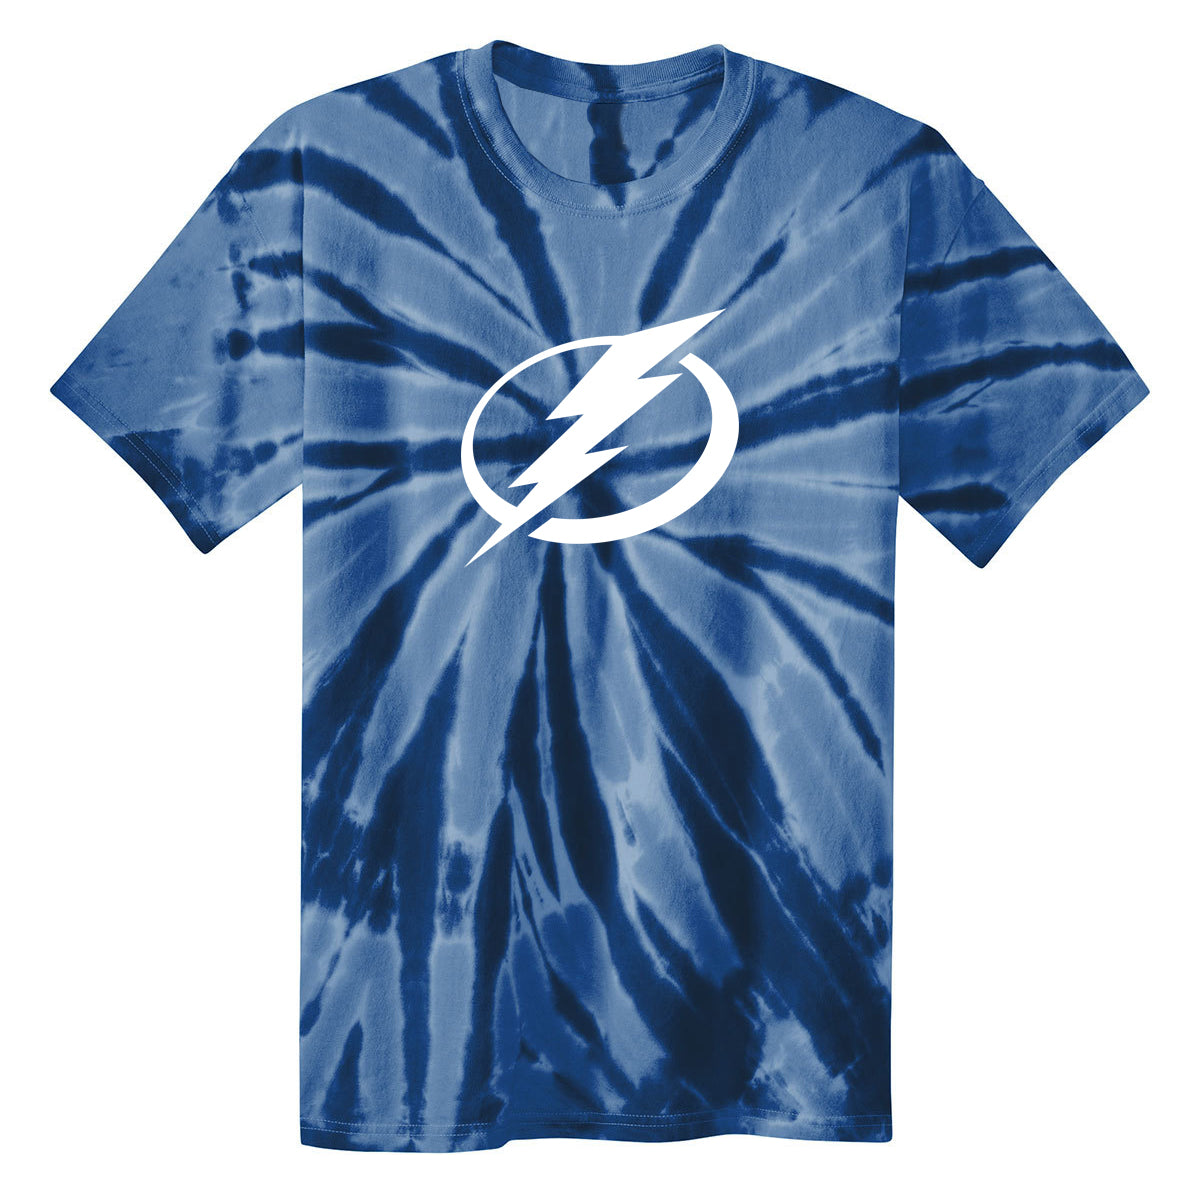 Tampa Bay Lightning Spiral Tie Dye Sleeveless Shirt for Men